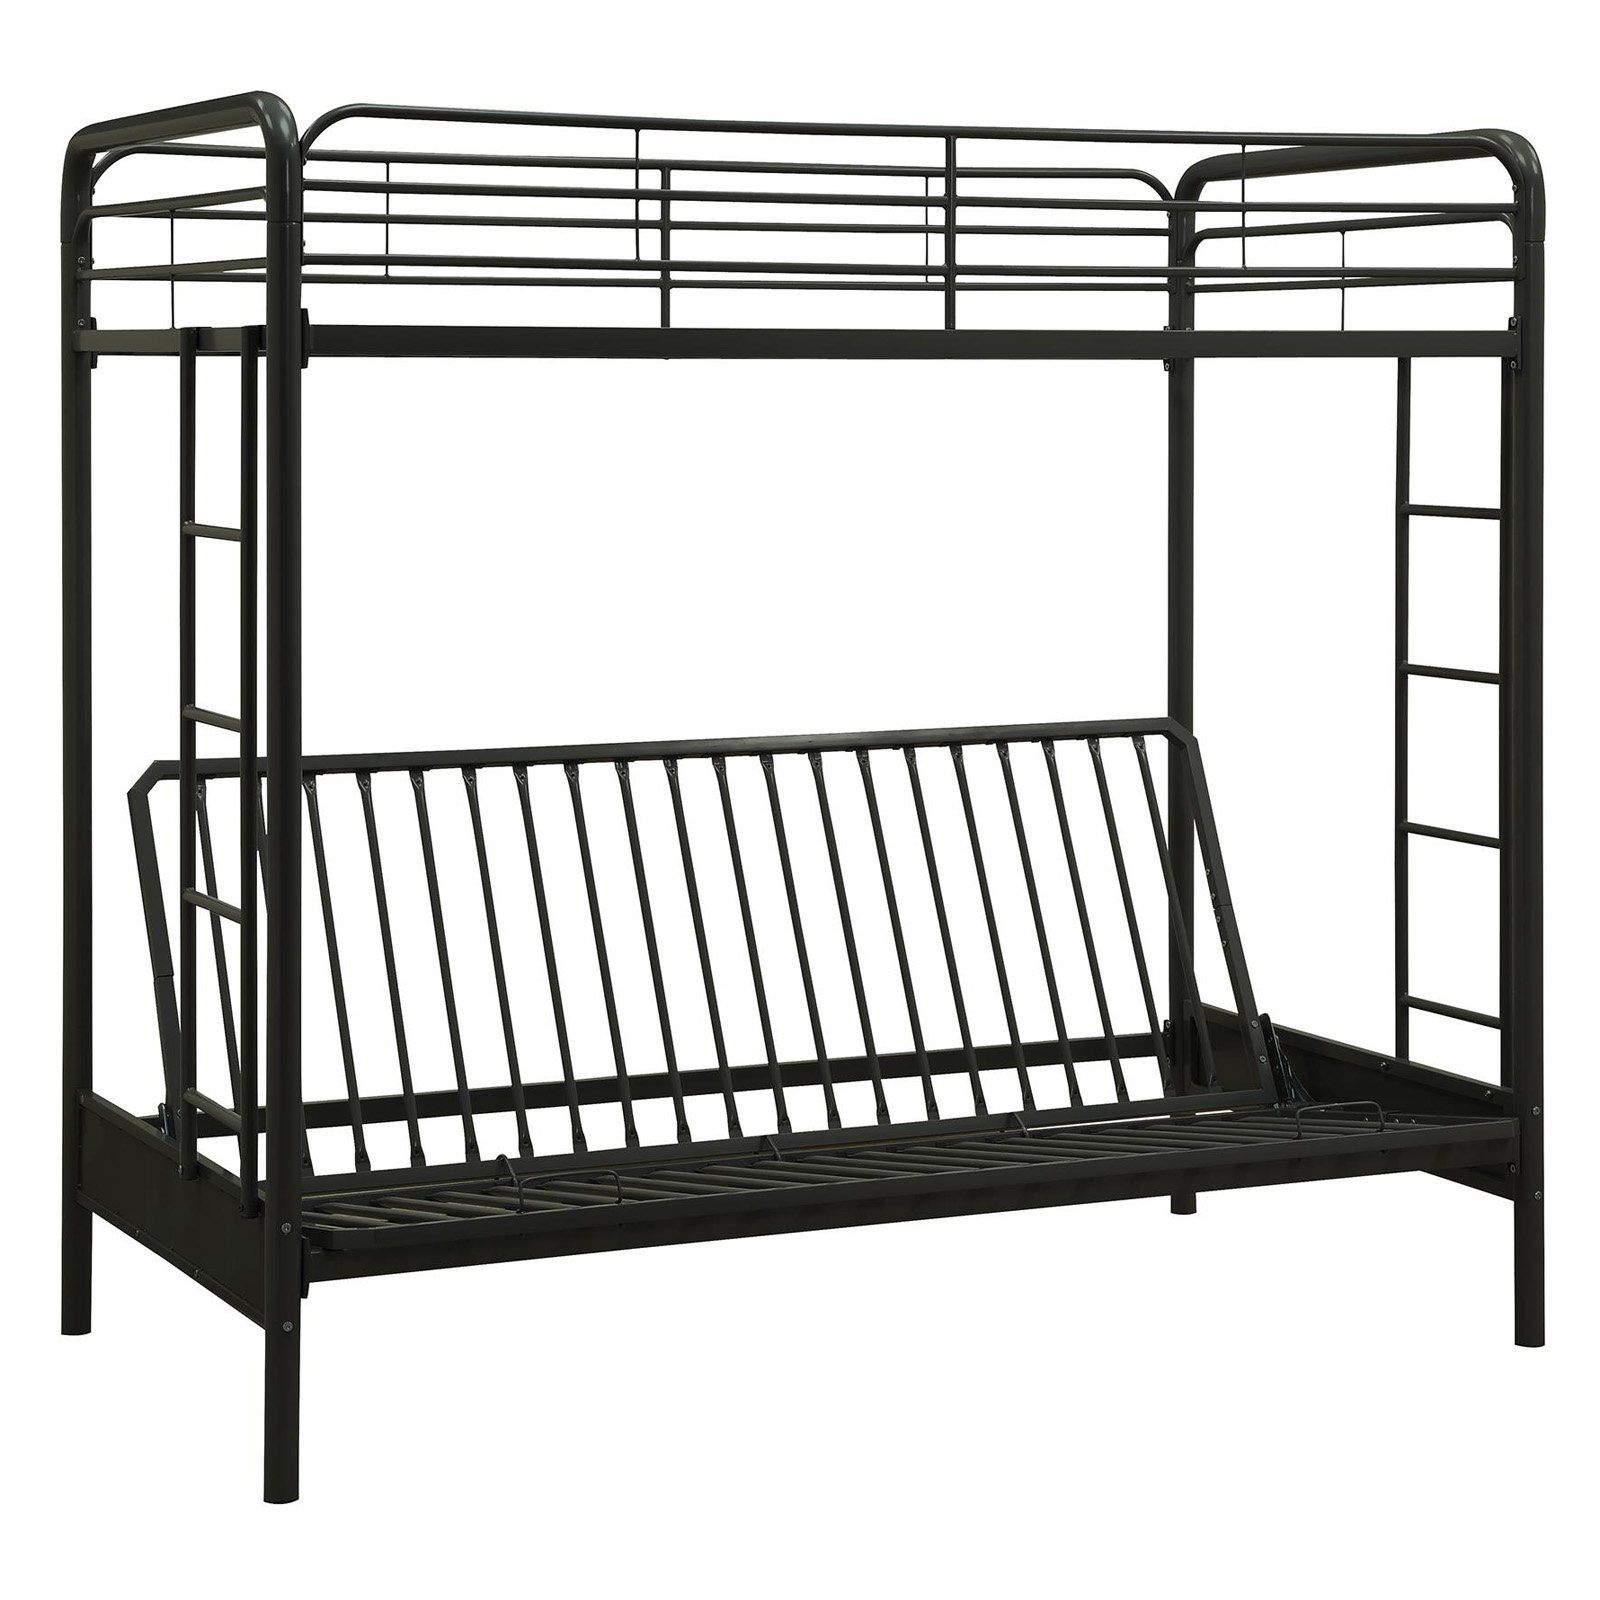 Metal bunk bed